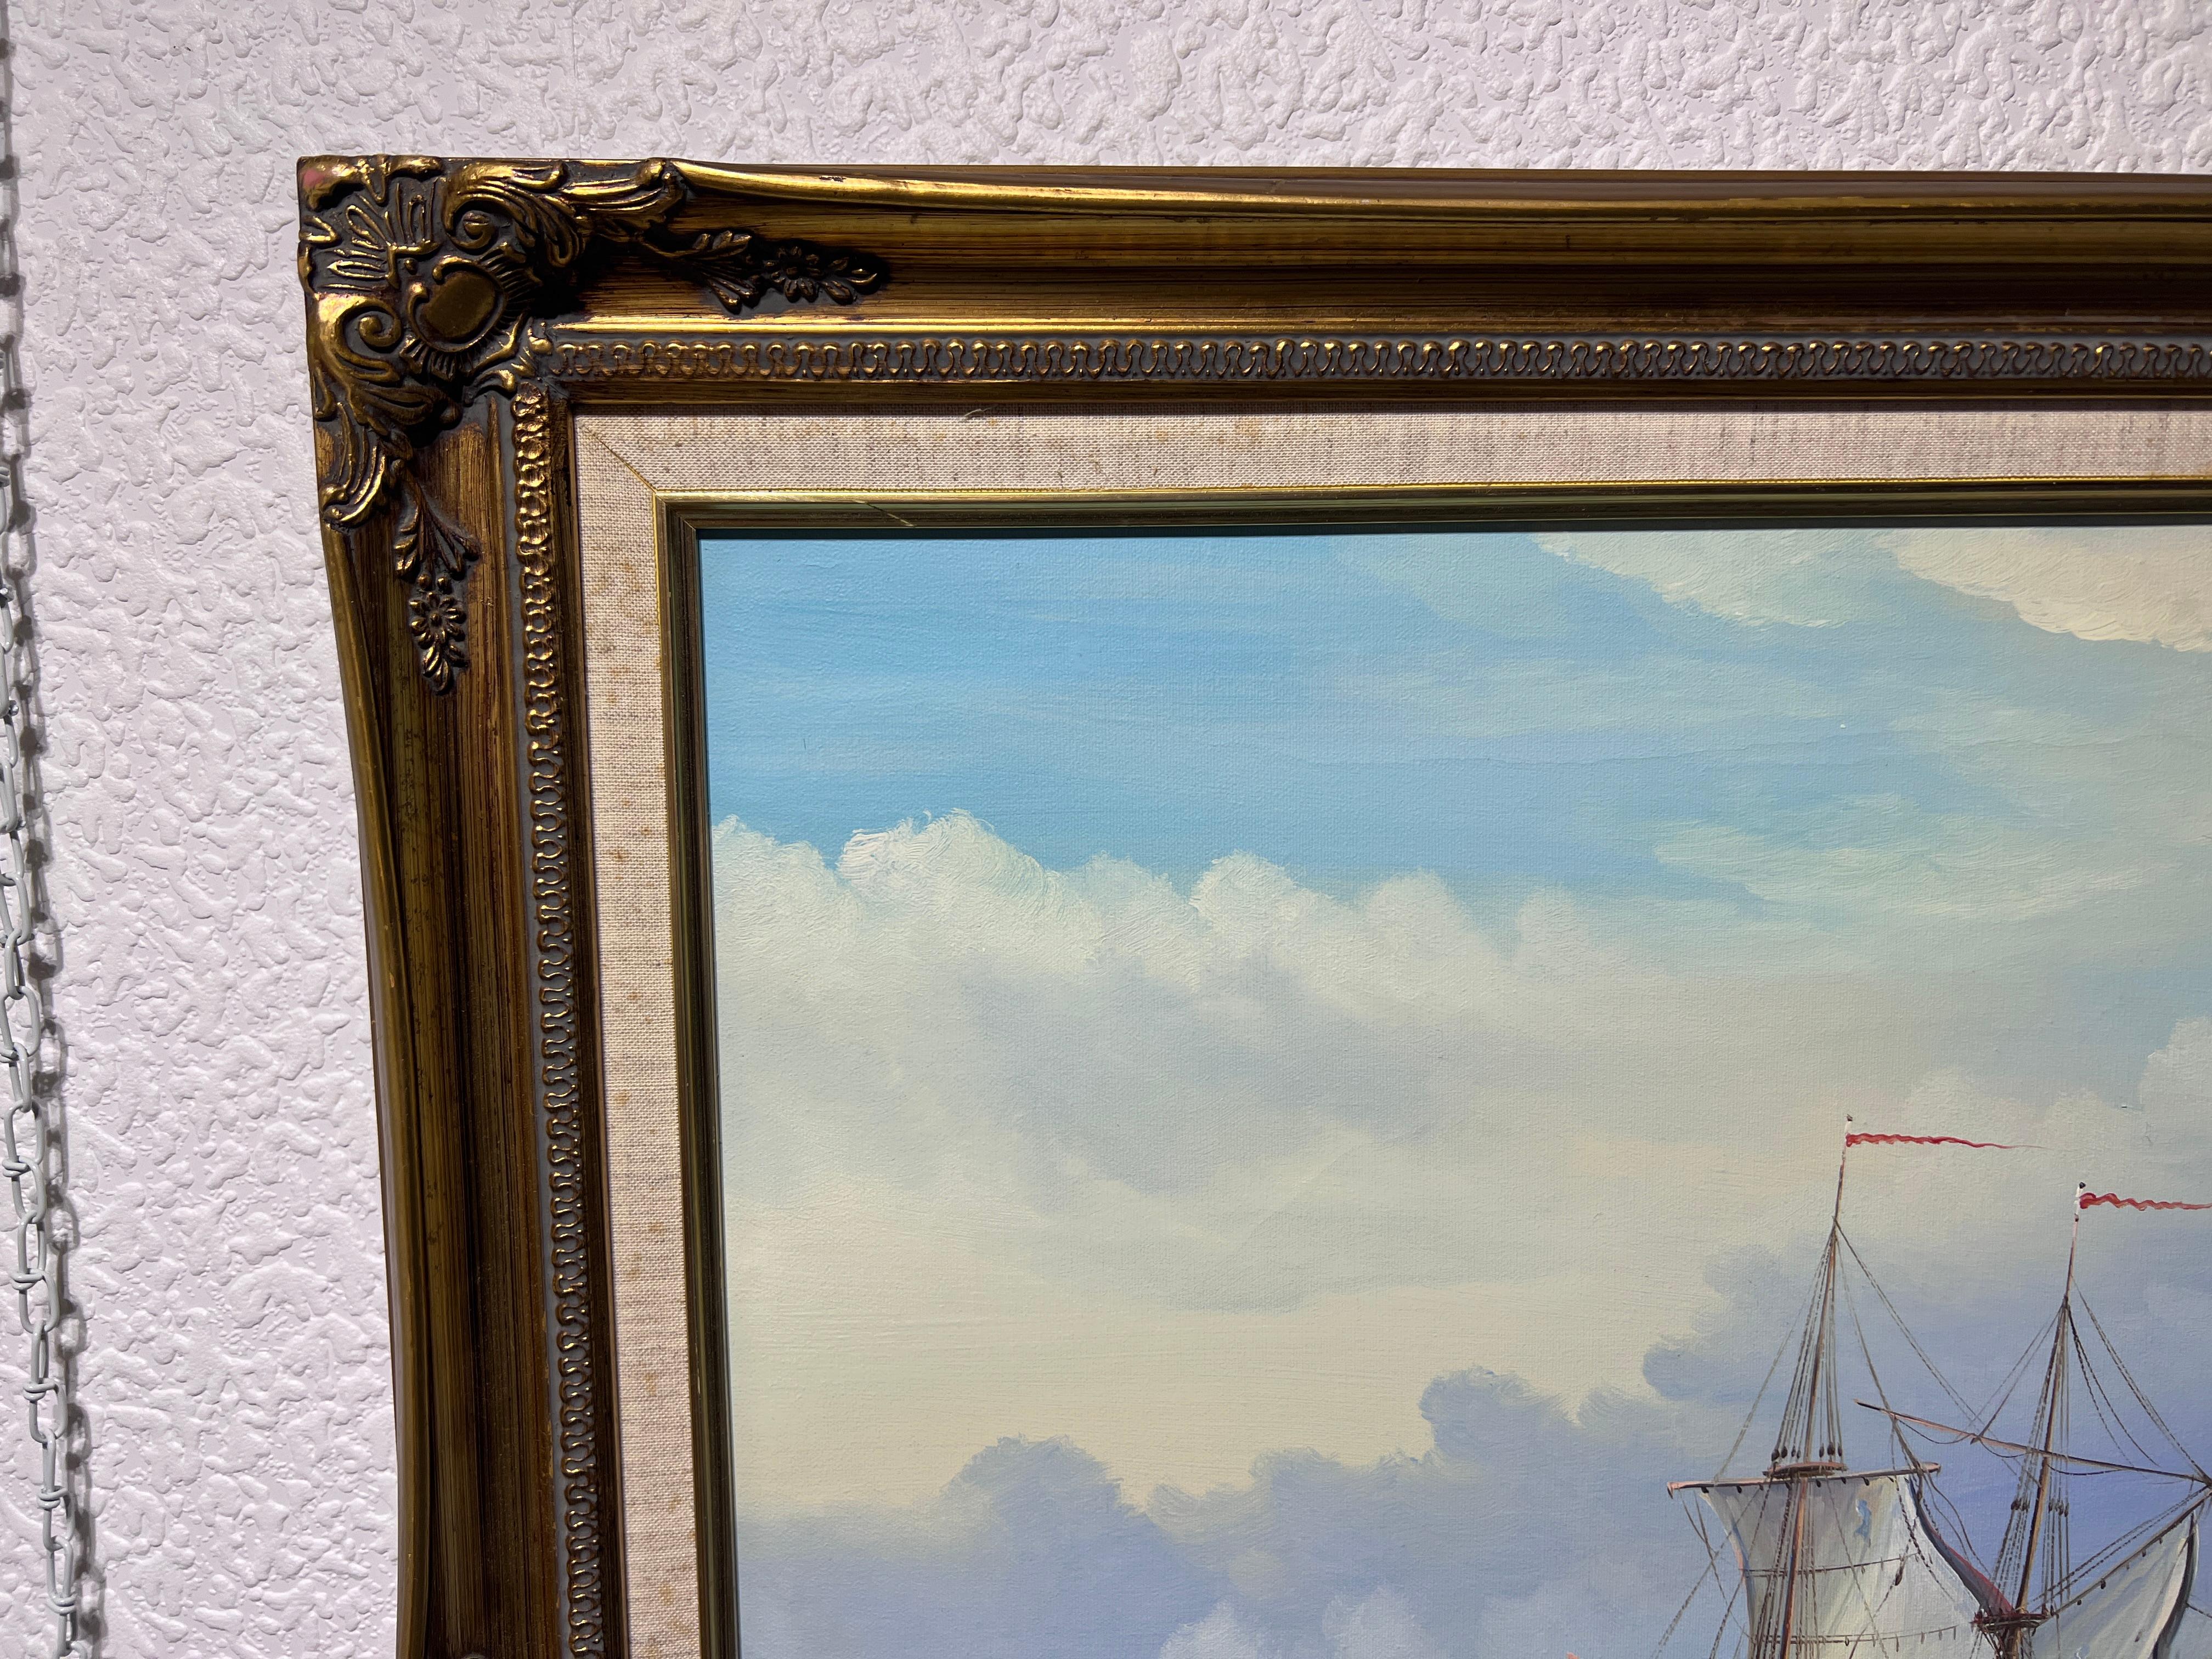 J.Harvey Large Oil painting on canvas, SHIPS BATTLE AT SEA, Signed, Framed For Sale 1